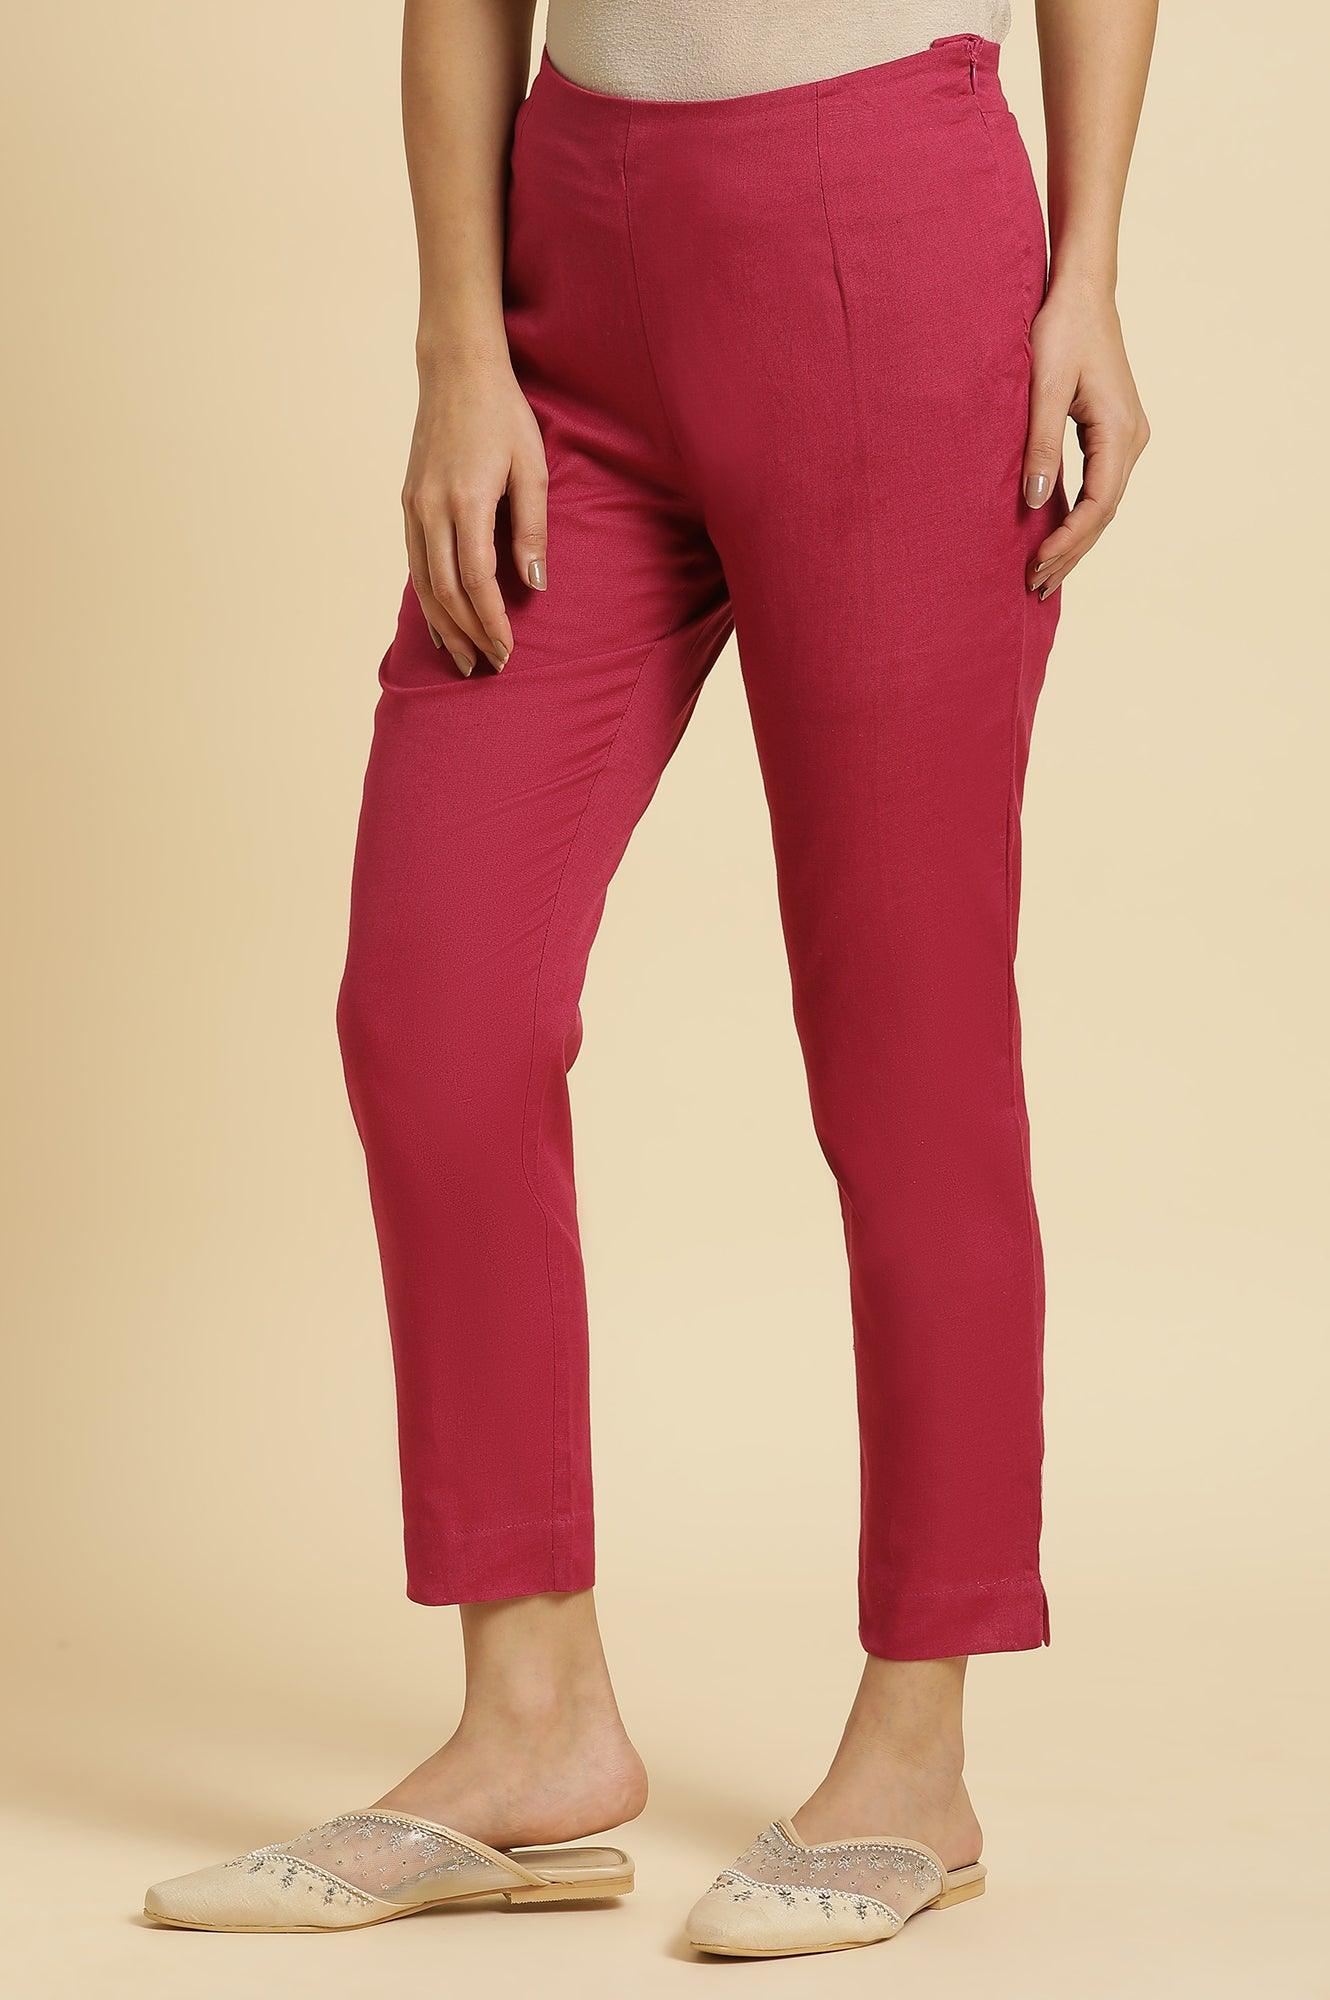 Pink Solid Cotton Flax Slim Pants - wforwoman